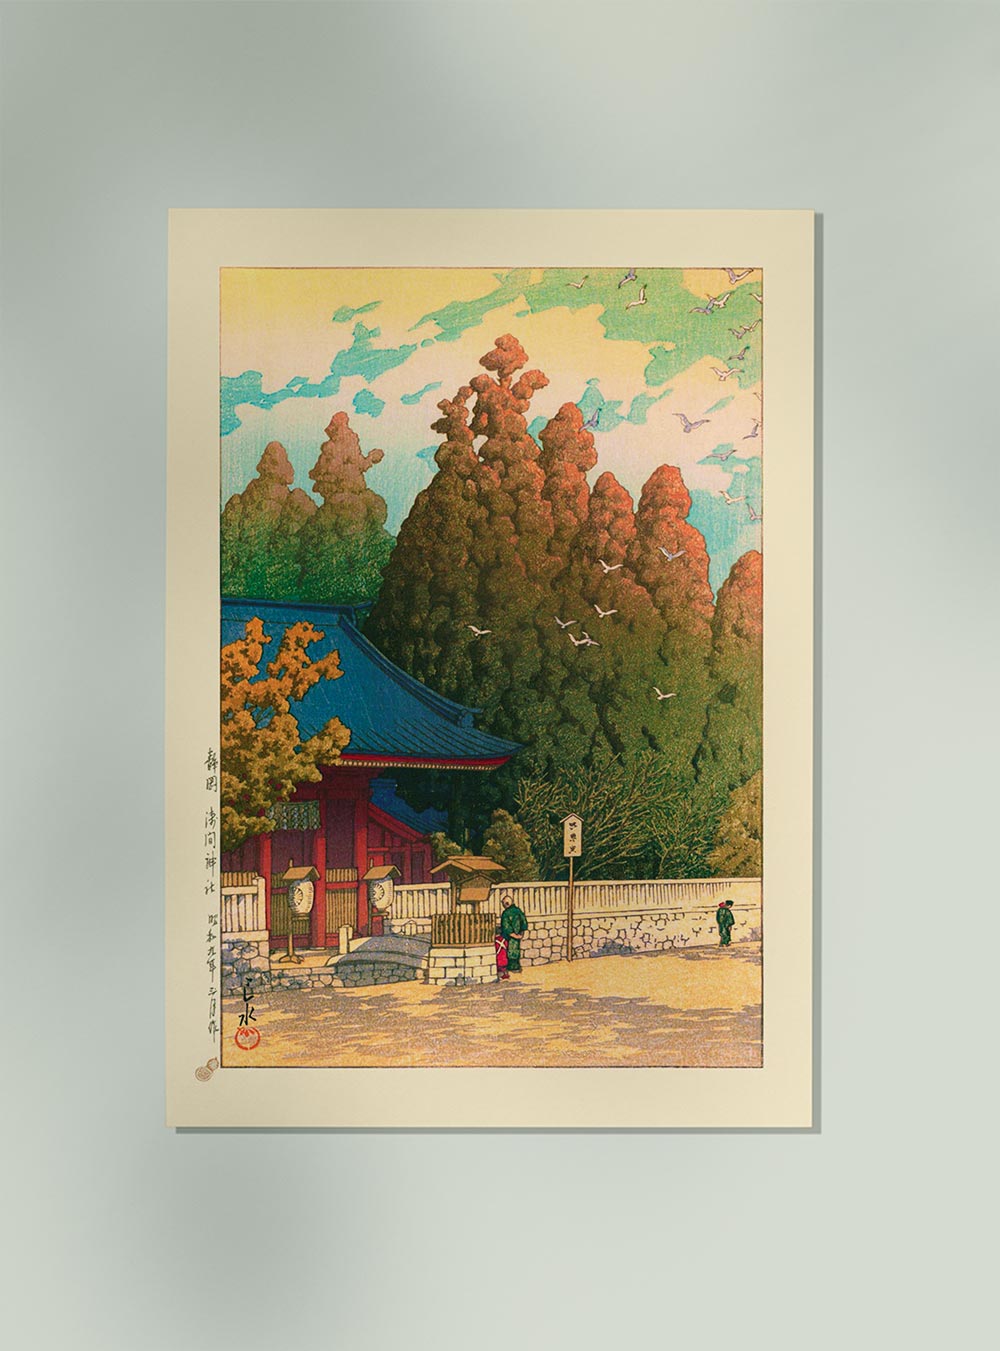 Asama Shrine in Shizuoka Art Print by Hasui